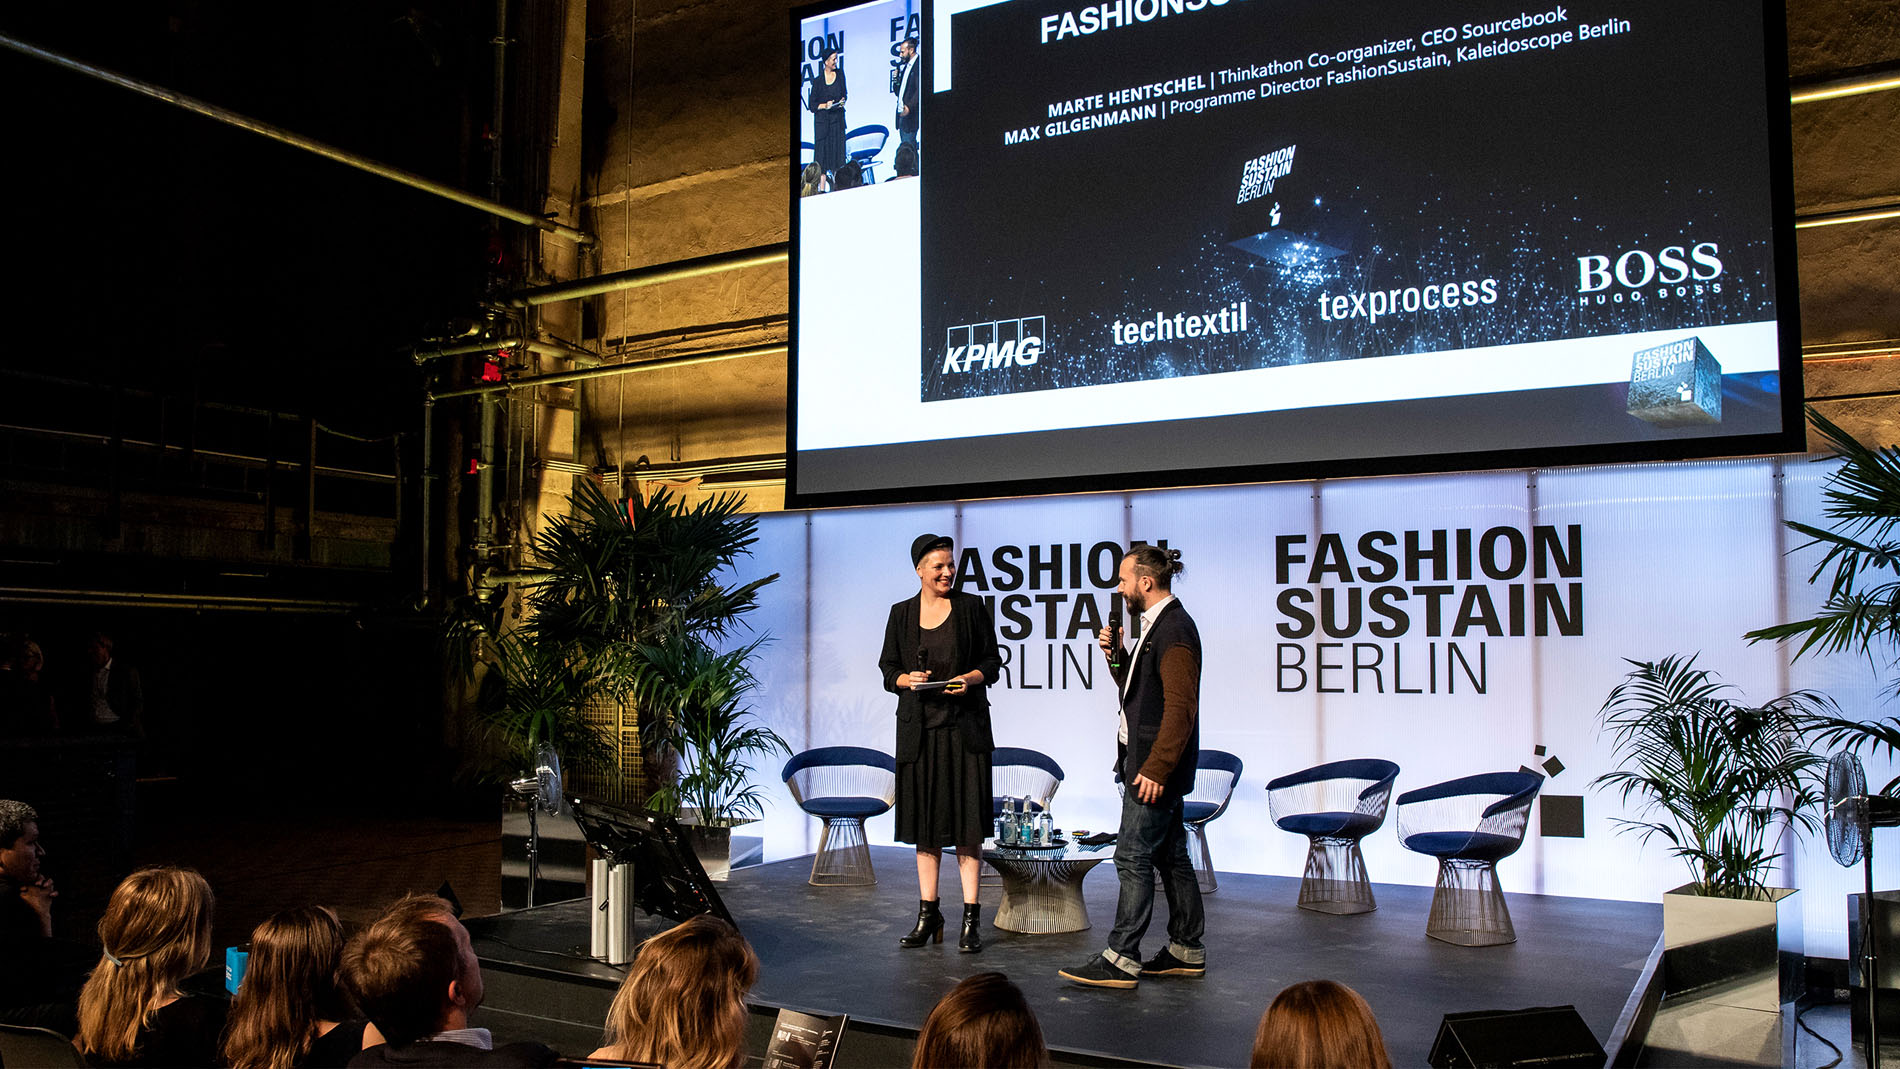 Fashion Sustain Berlin